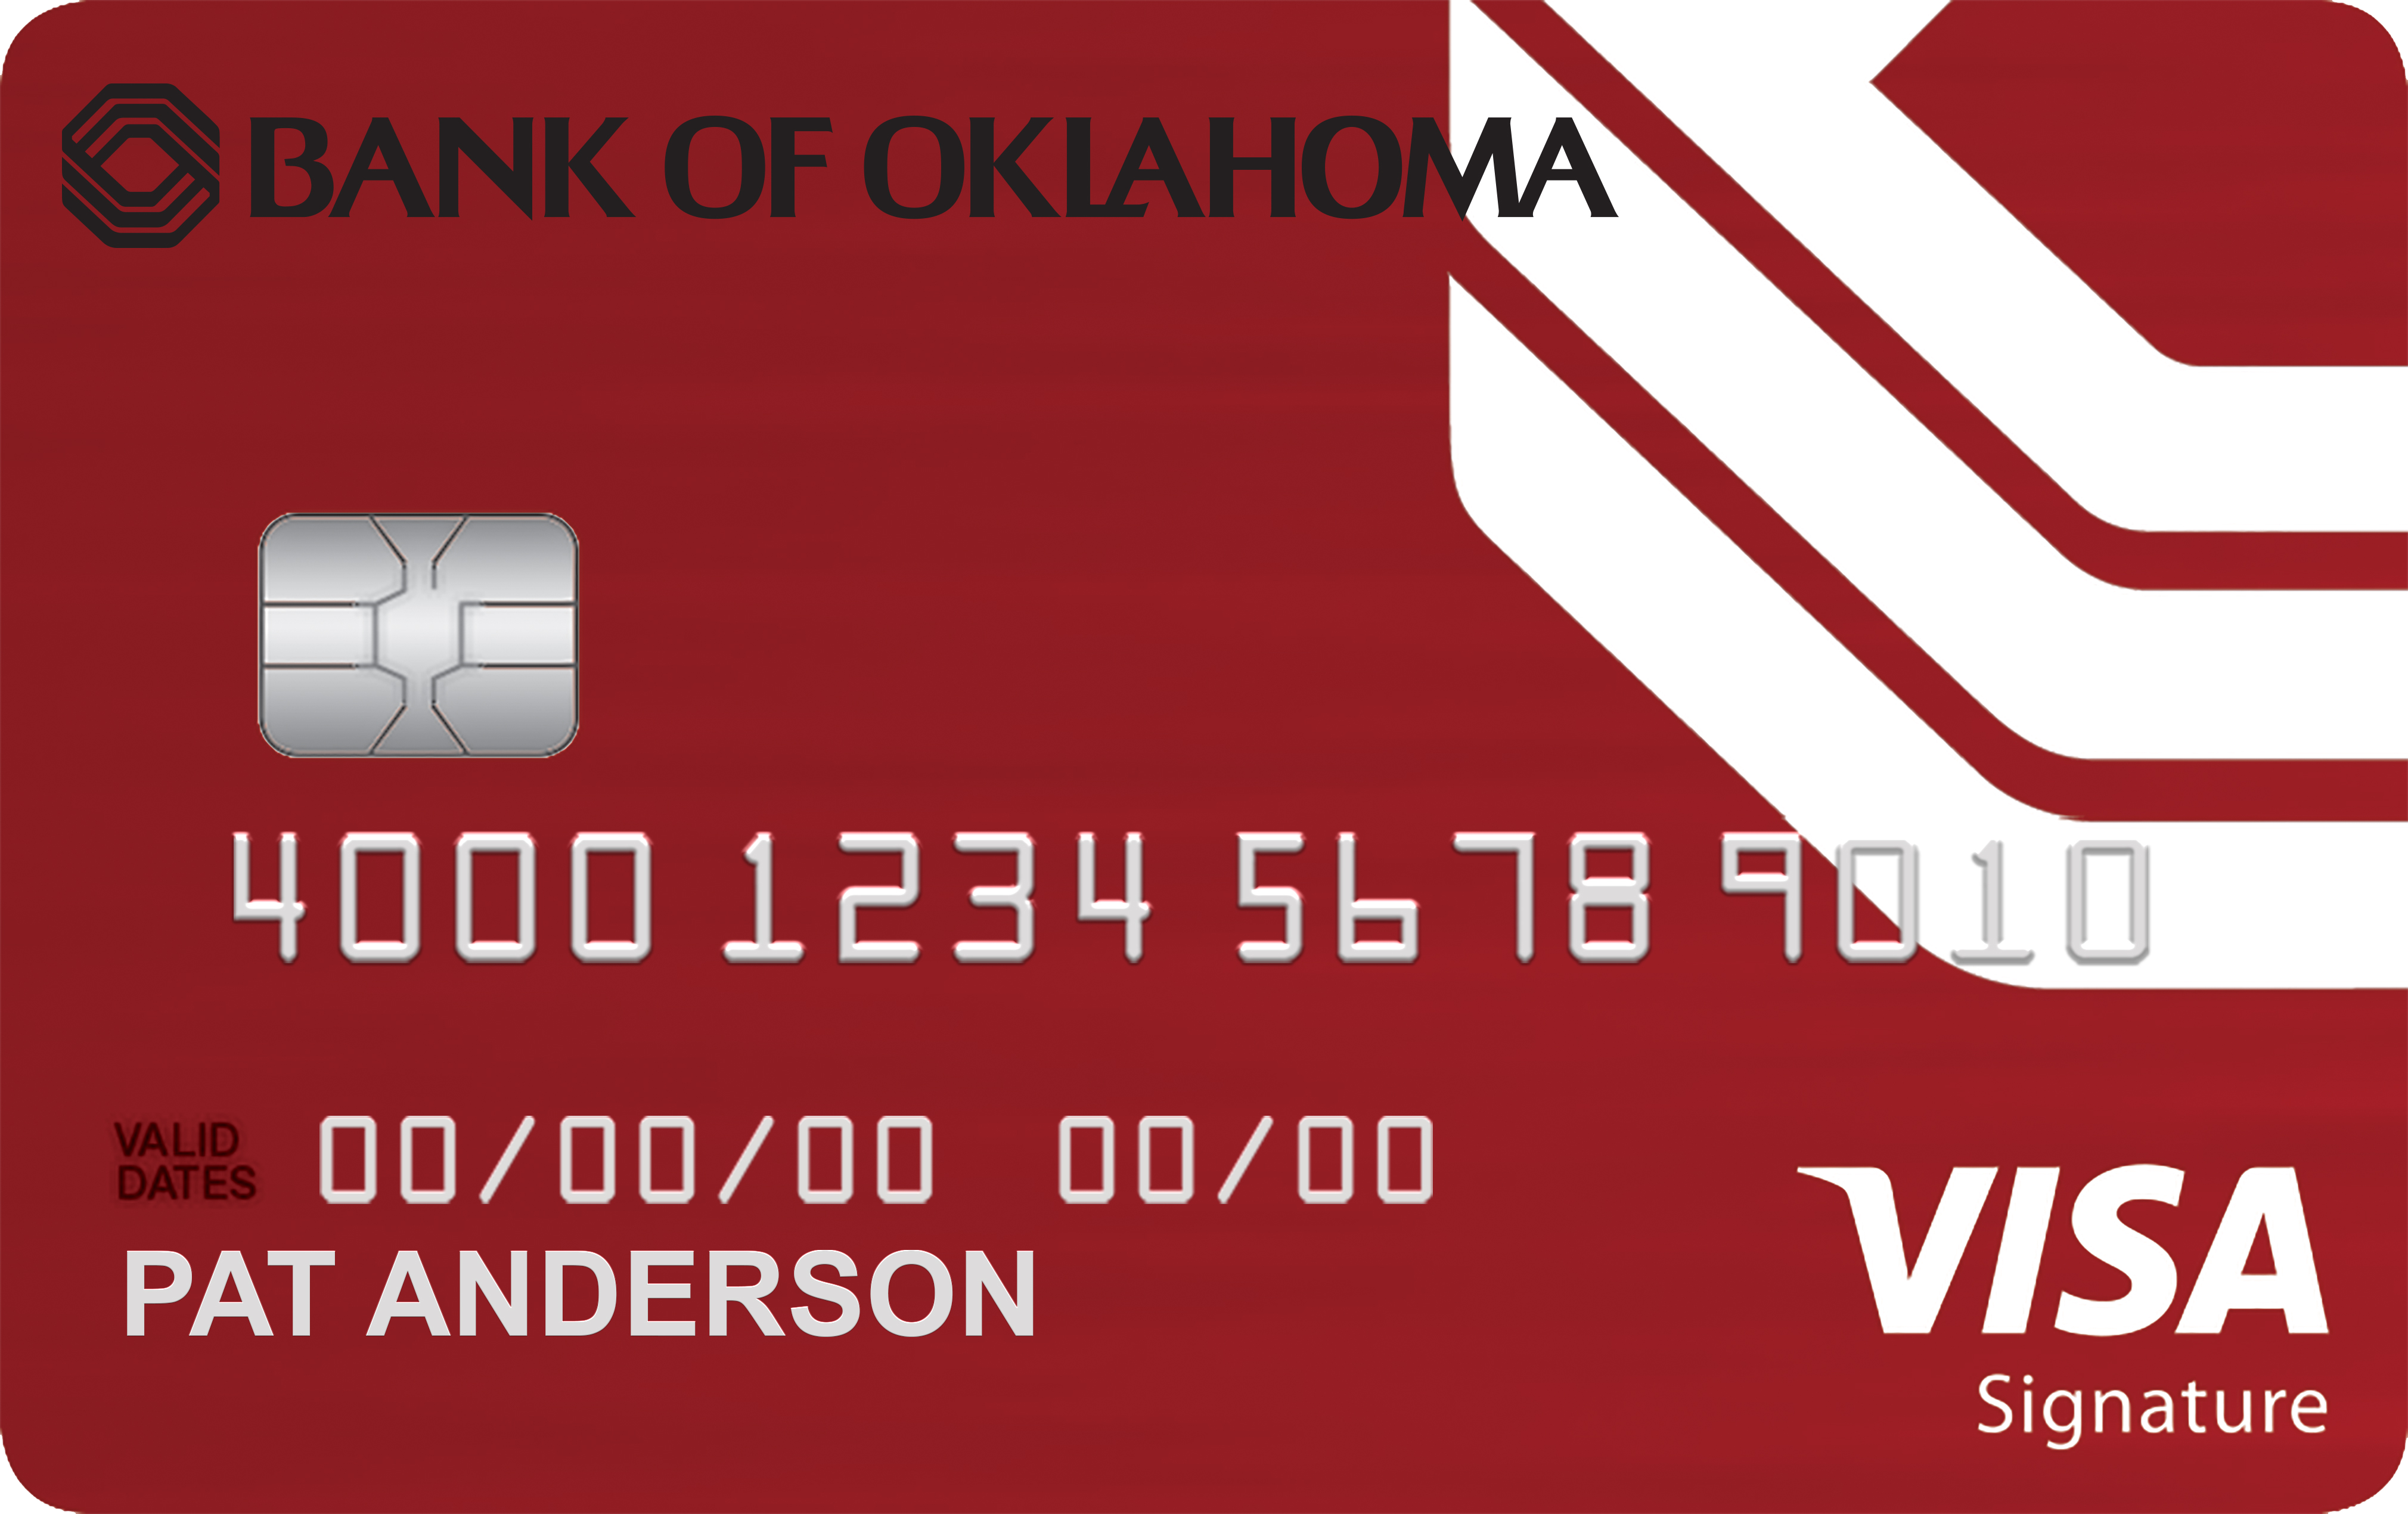 Bank of Oklahoma Travel Rewards+ Card